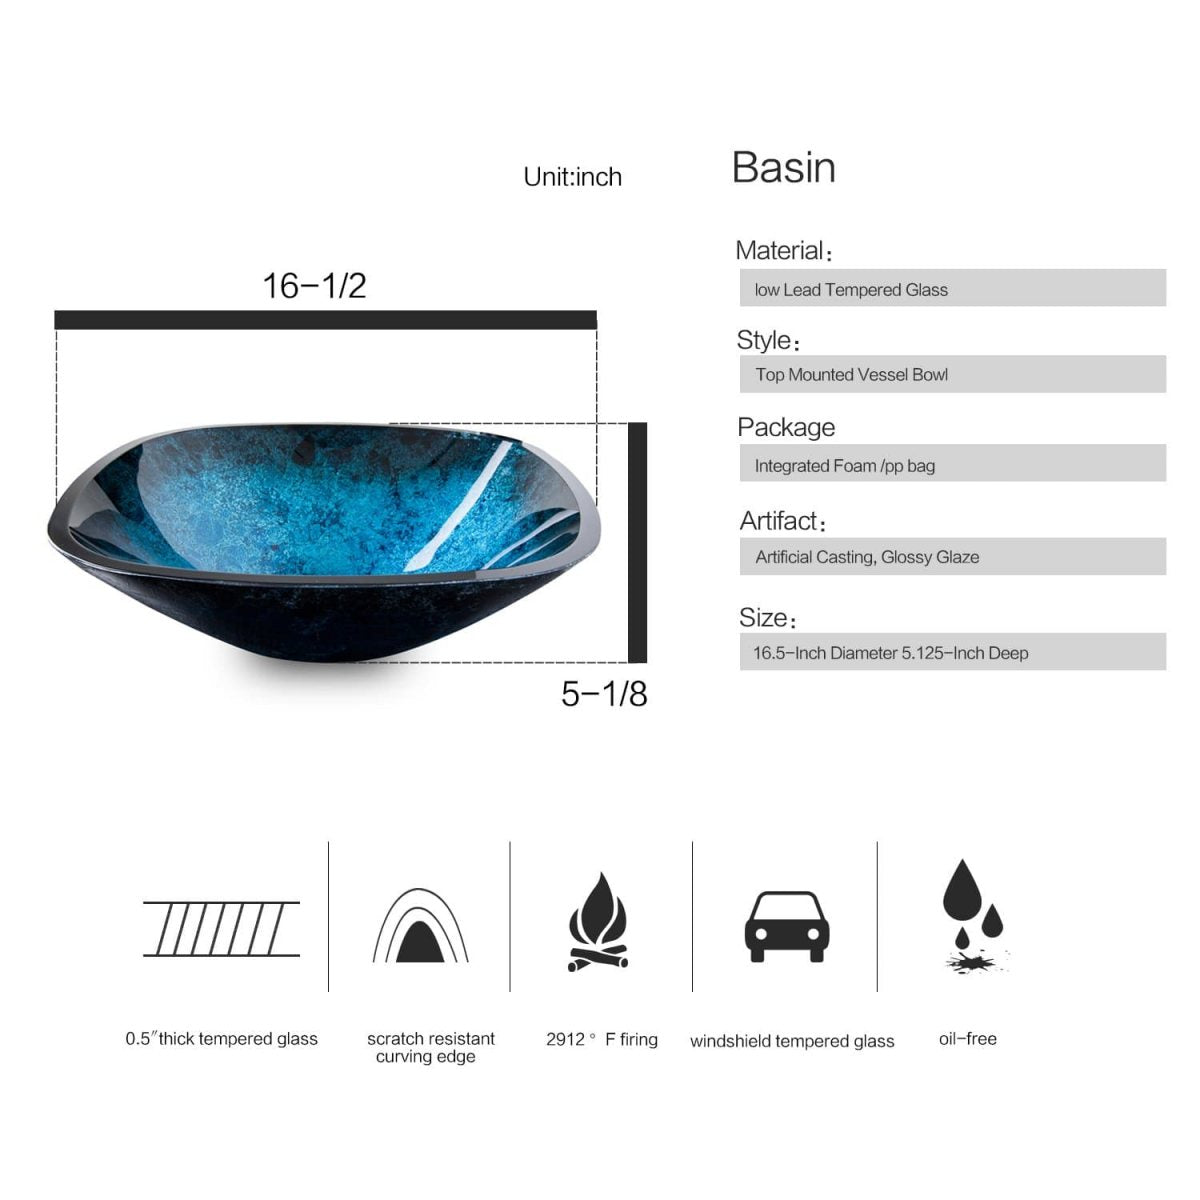 Elecwish Blue Square Sink basin size and description